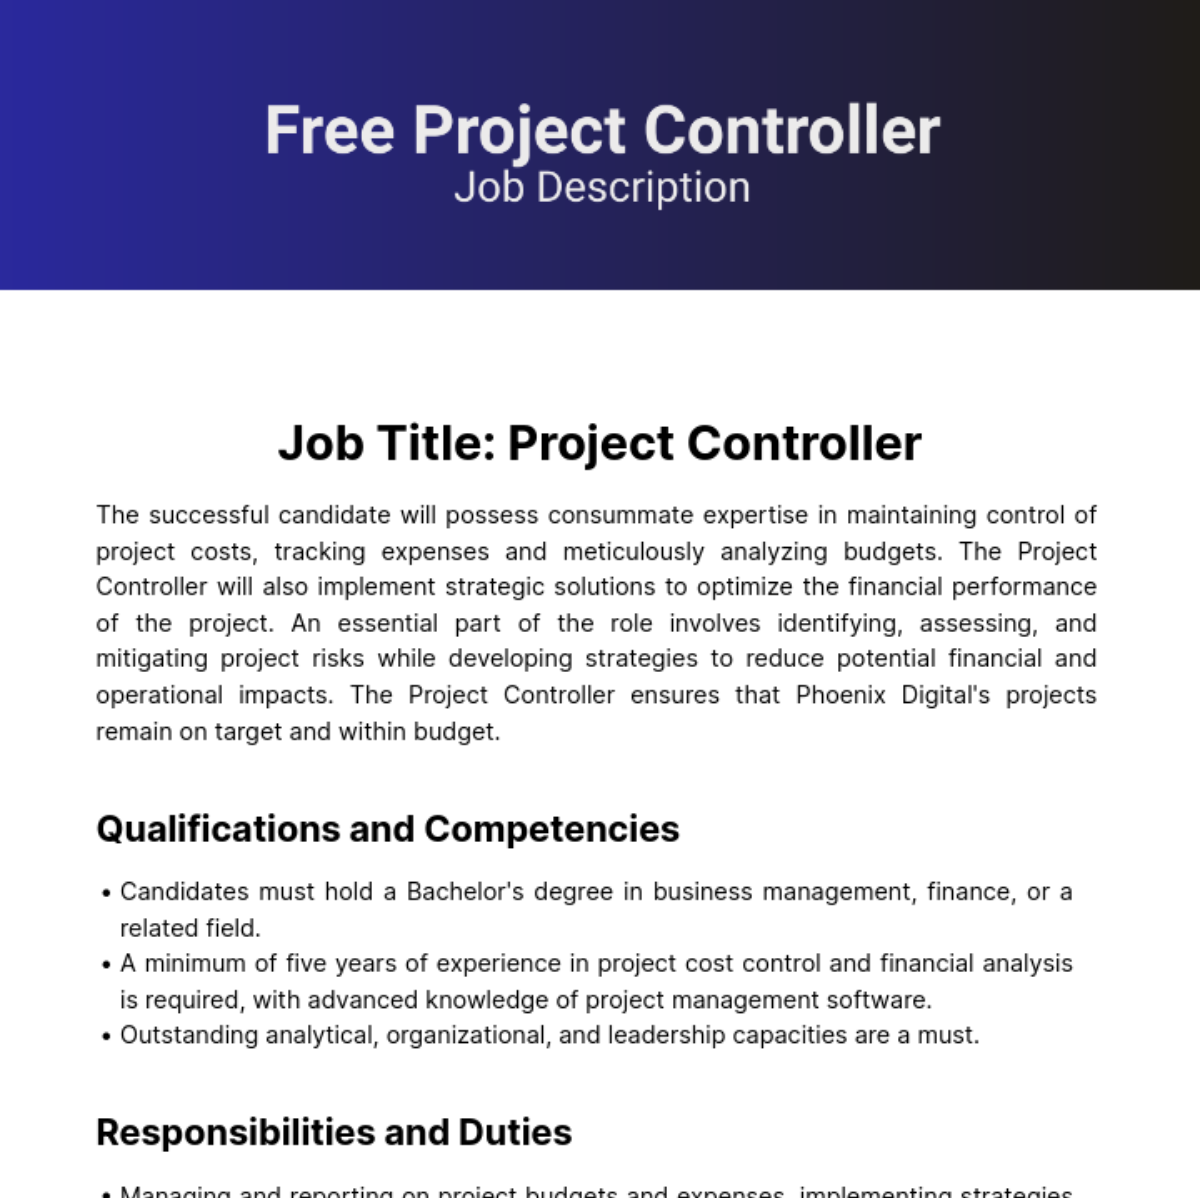 Free Project Controller Job Description Template